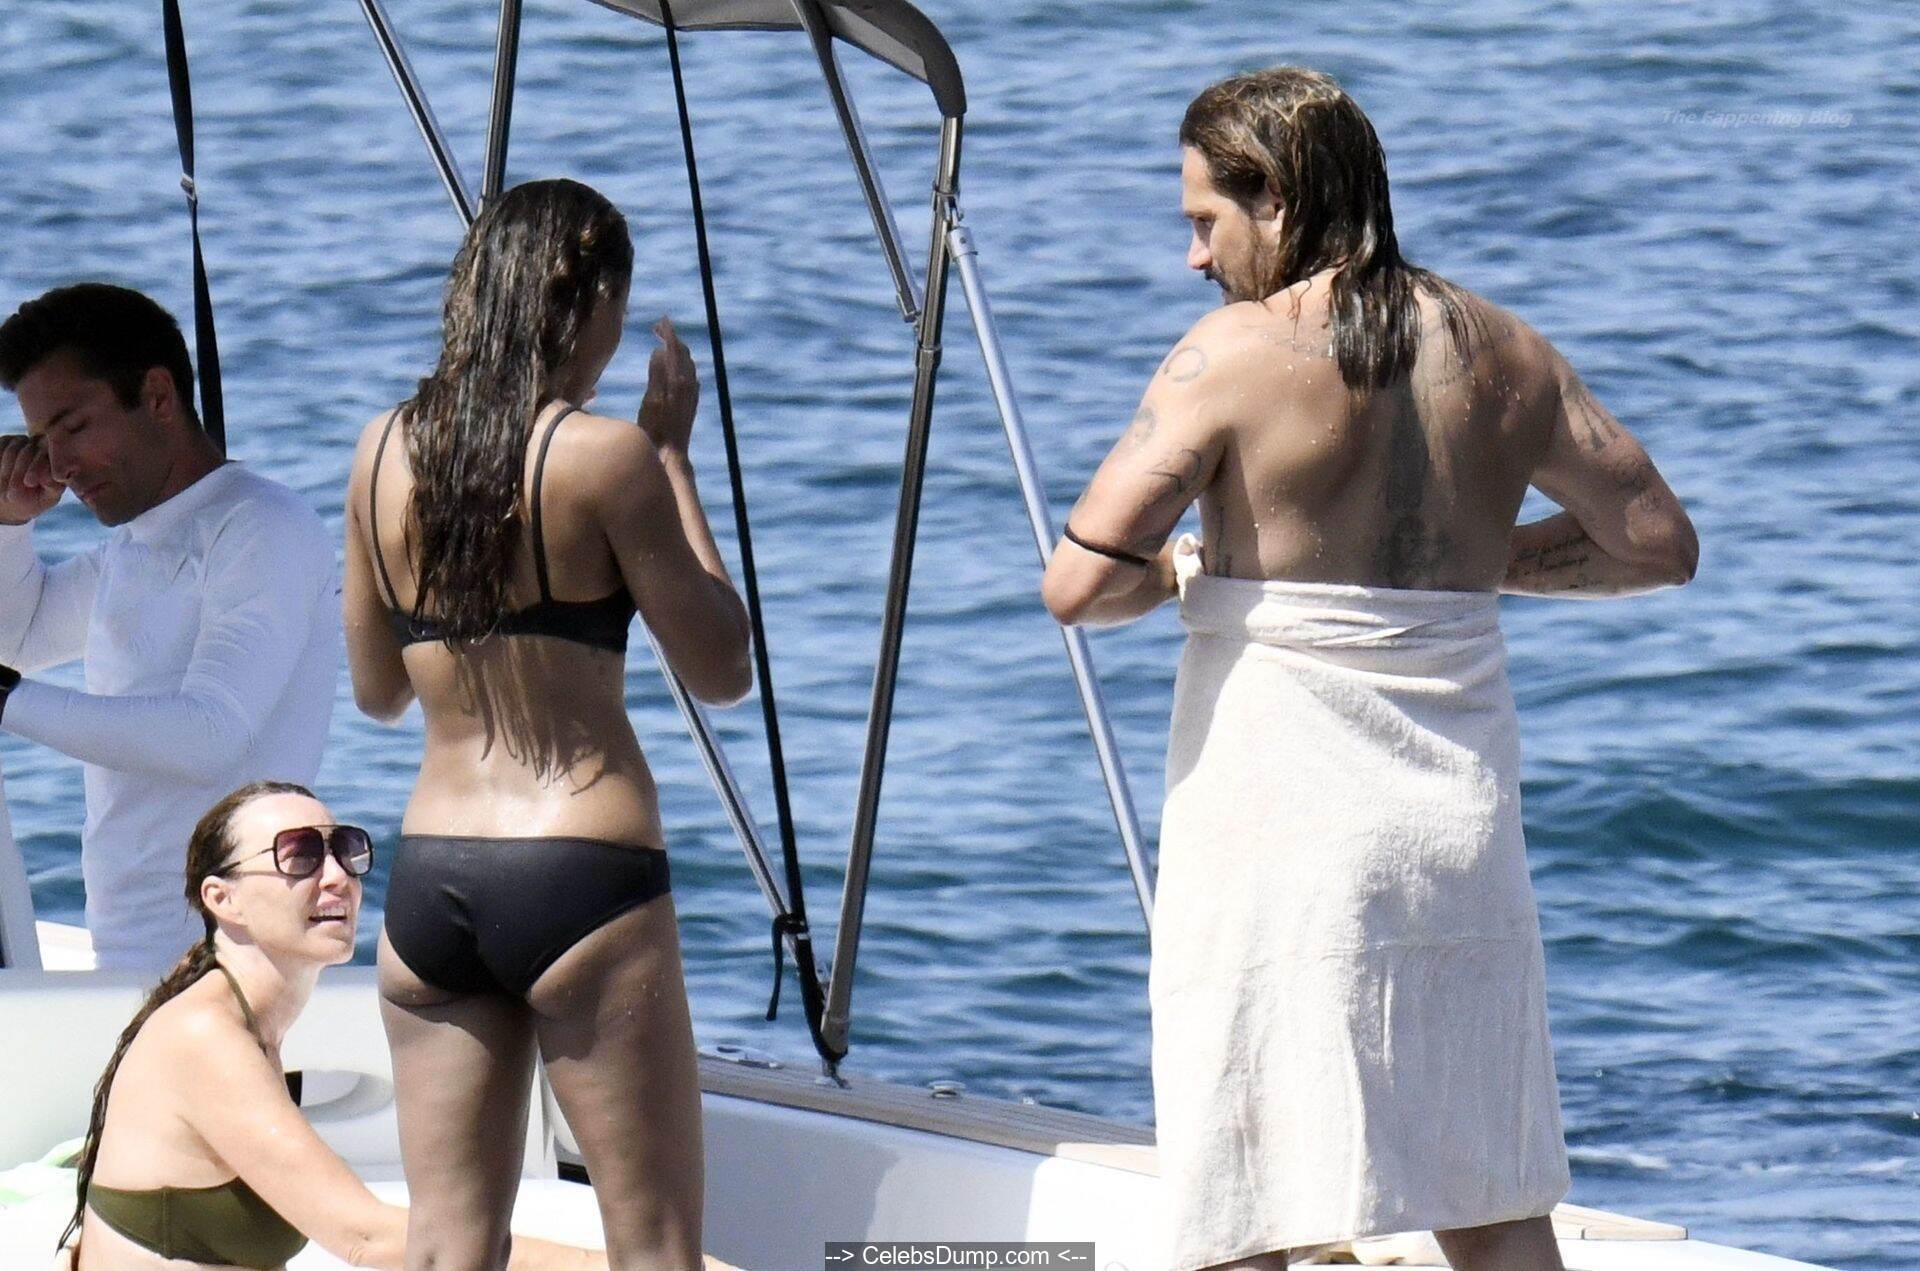 Zoe Saldana topless on yacht in Italy paparazzi photos - August 16, 2021.